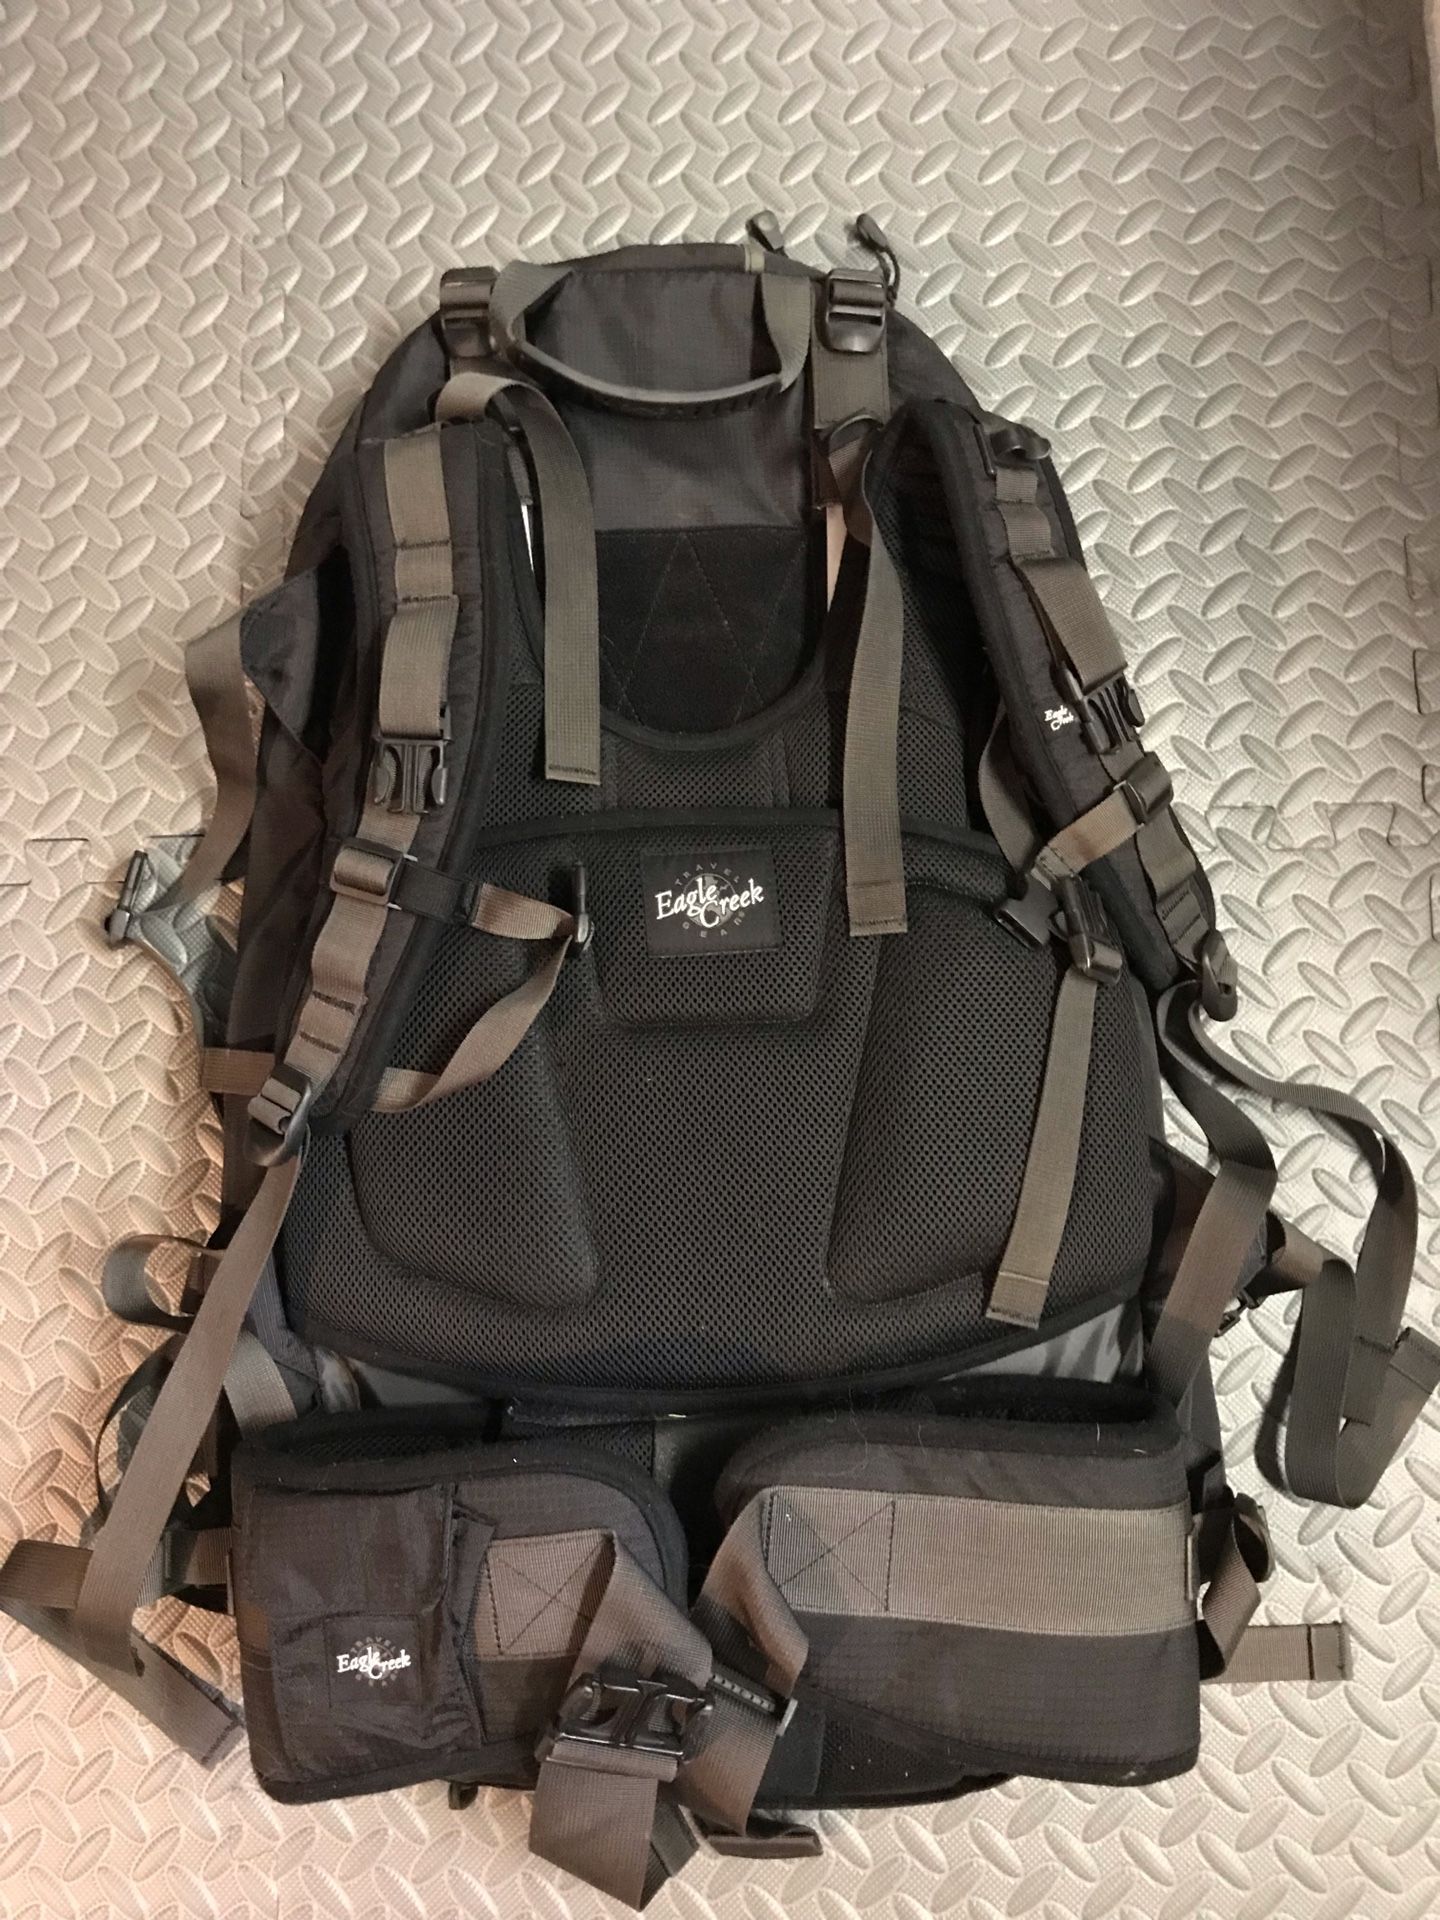 Eagle creek travel backpack